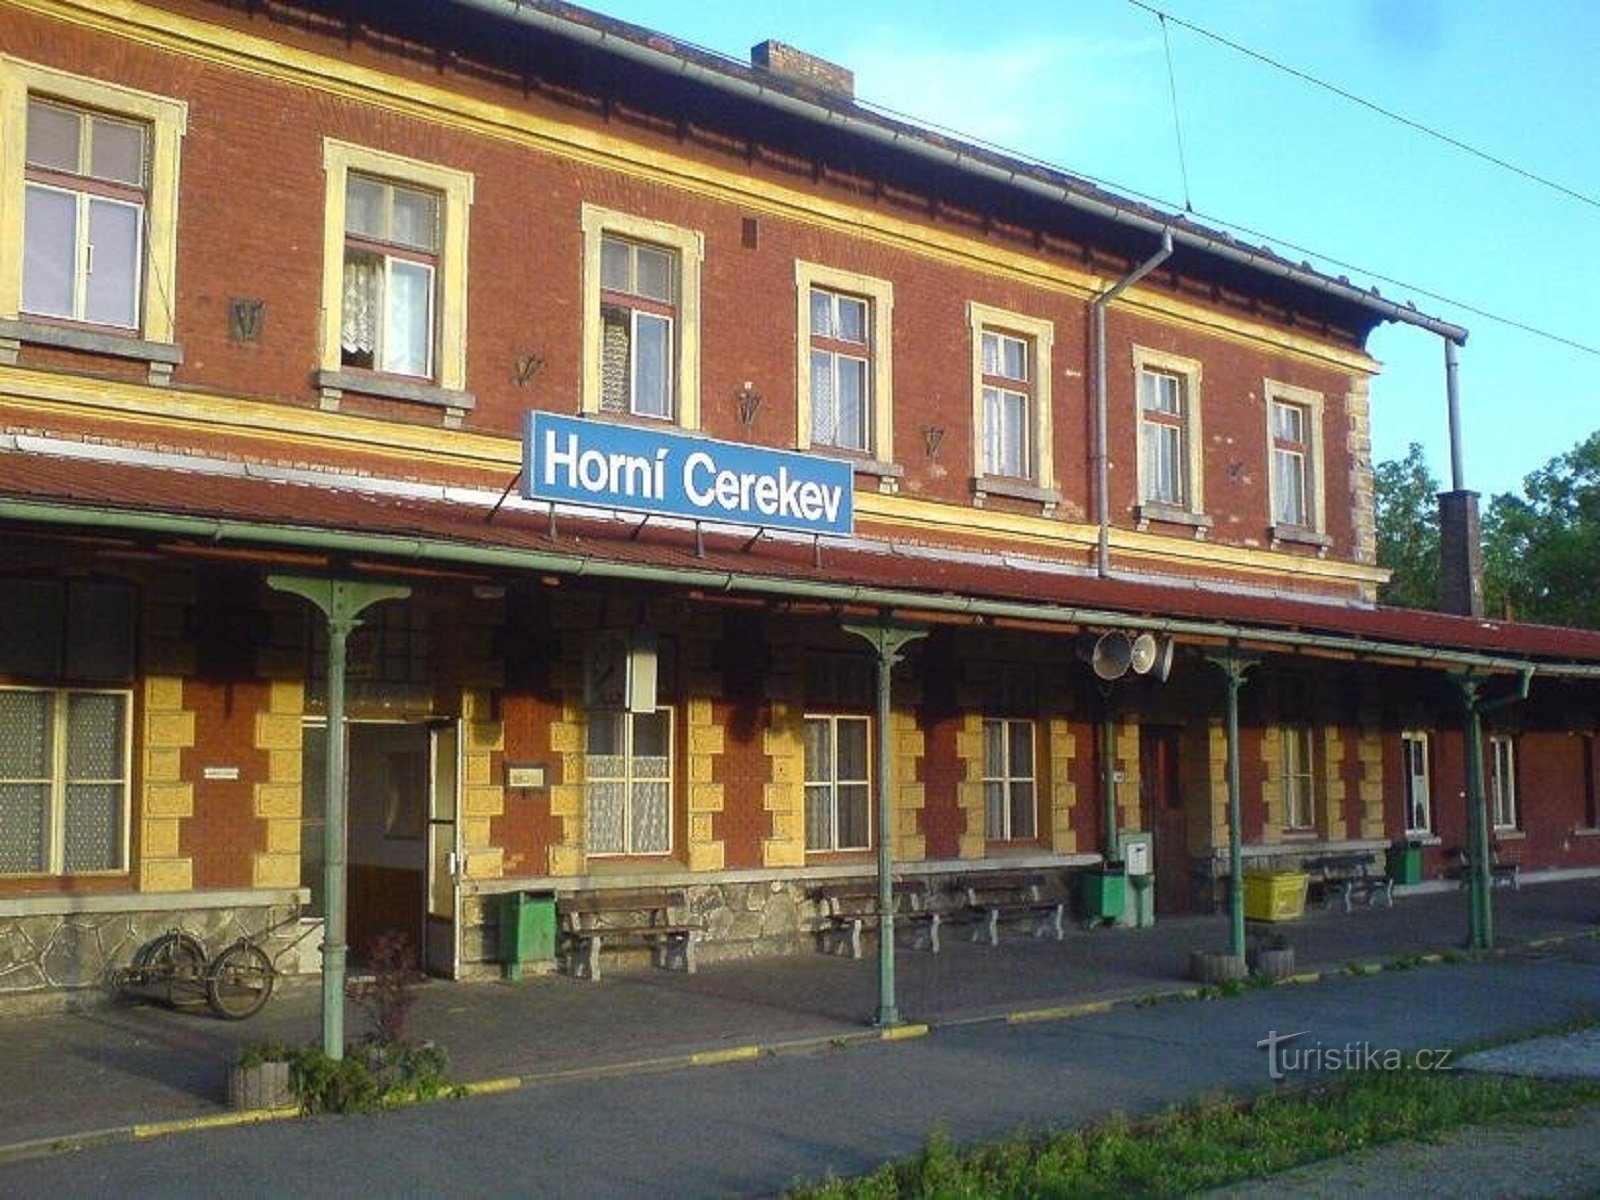 1. Gare de Horní Cerekv.